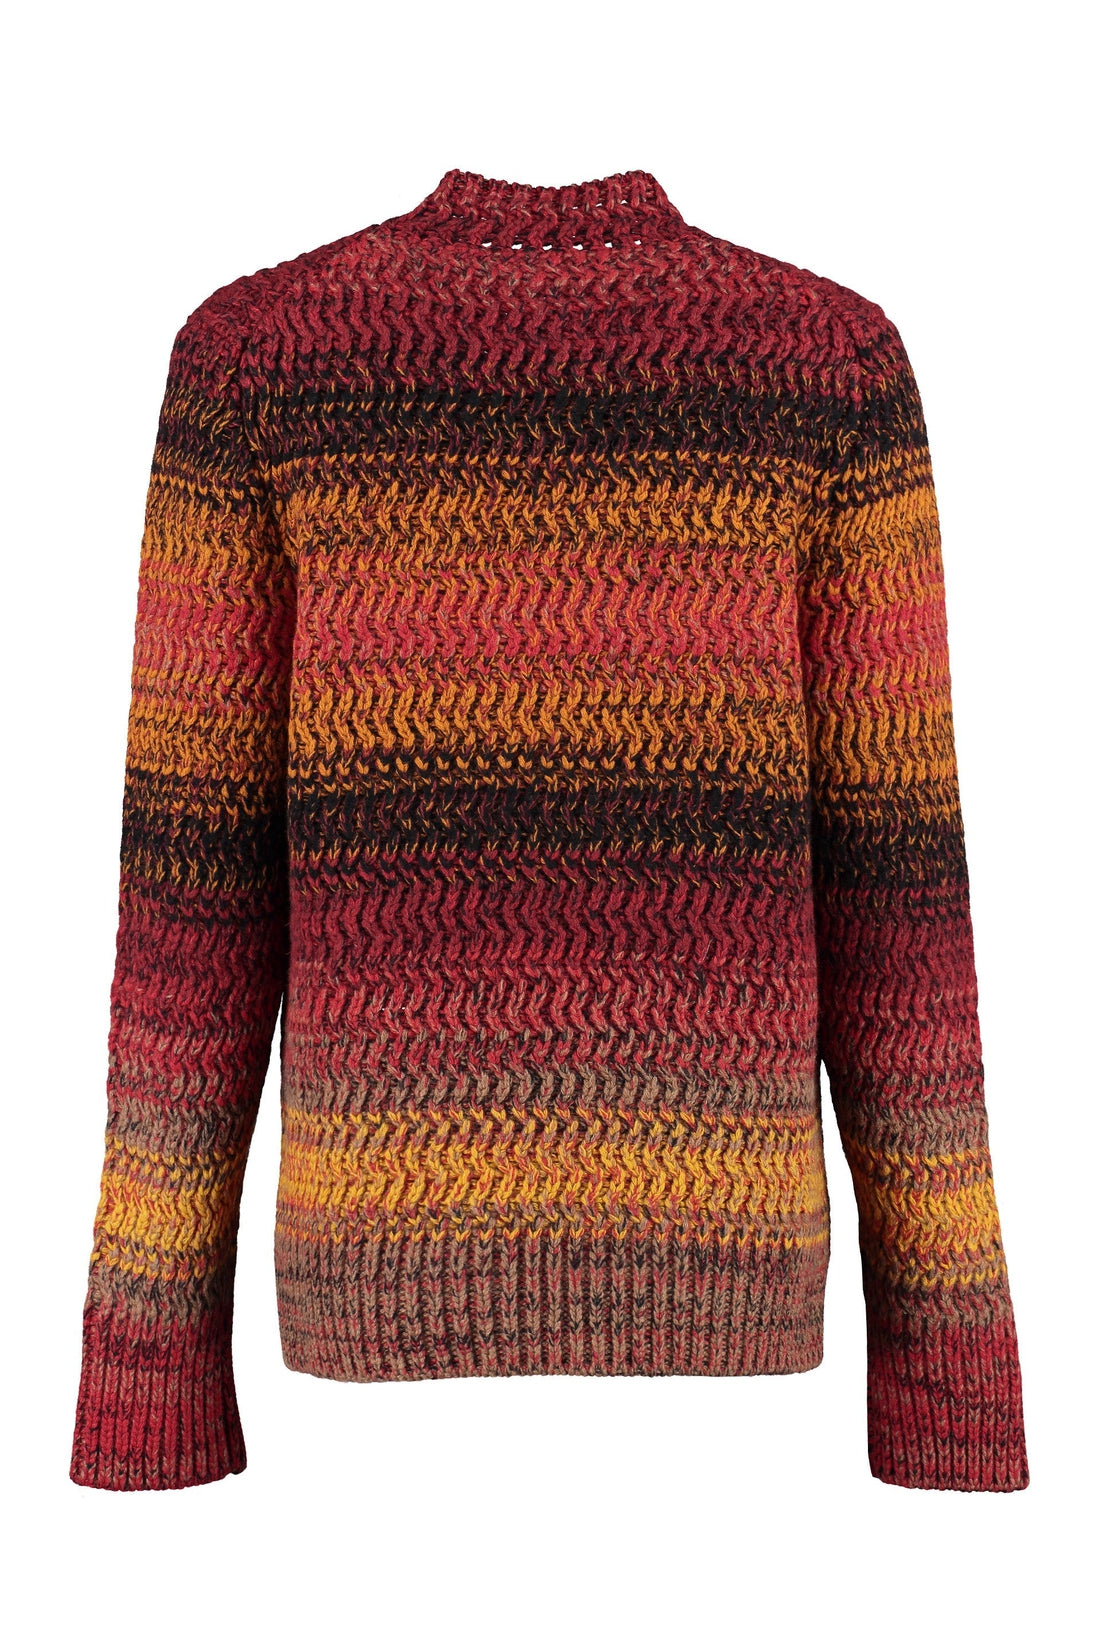 Chloé-OUTLET-SALE-Crew-neck wool sweater-ARCHIVIST